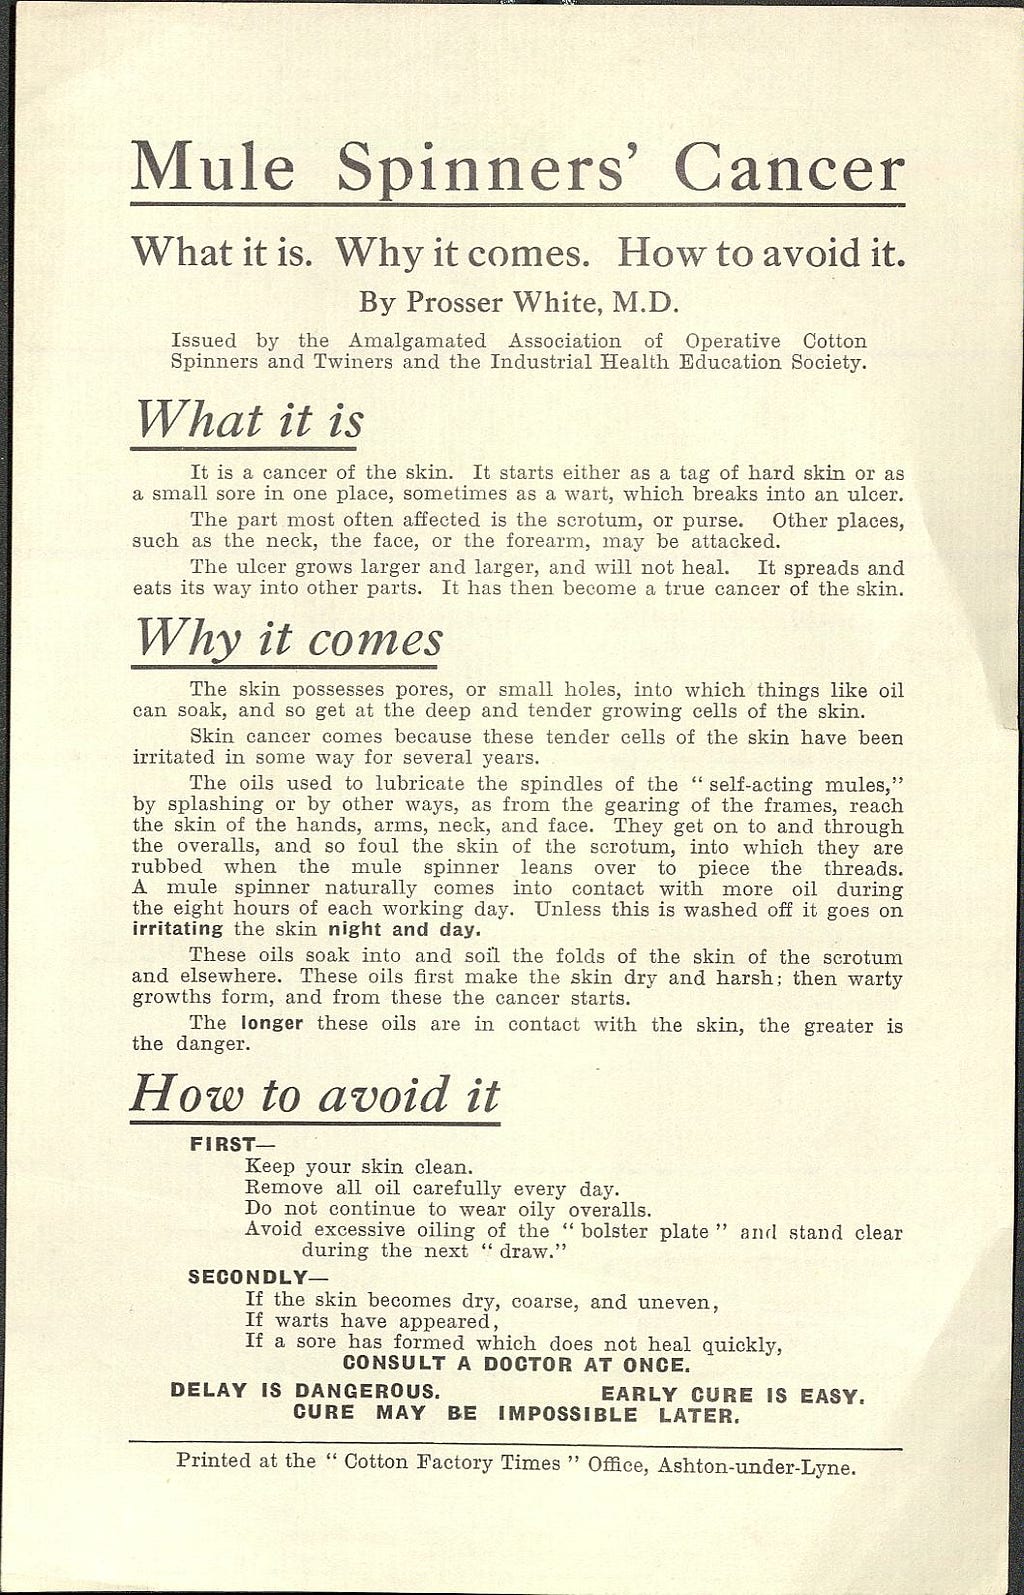 Printed leaflet on paper